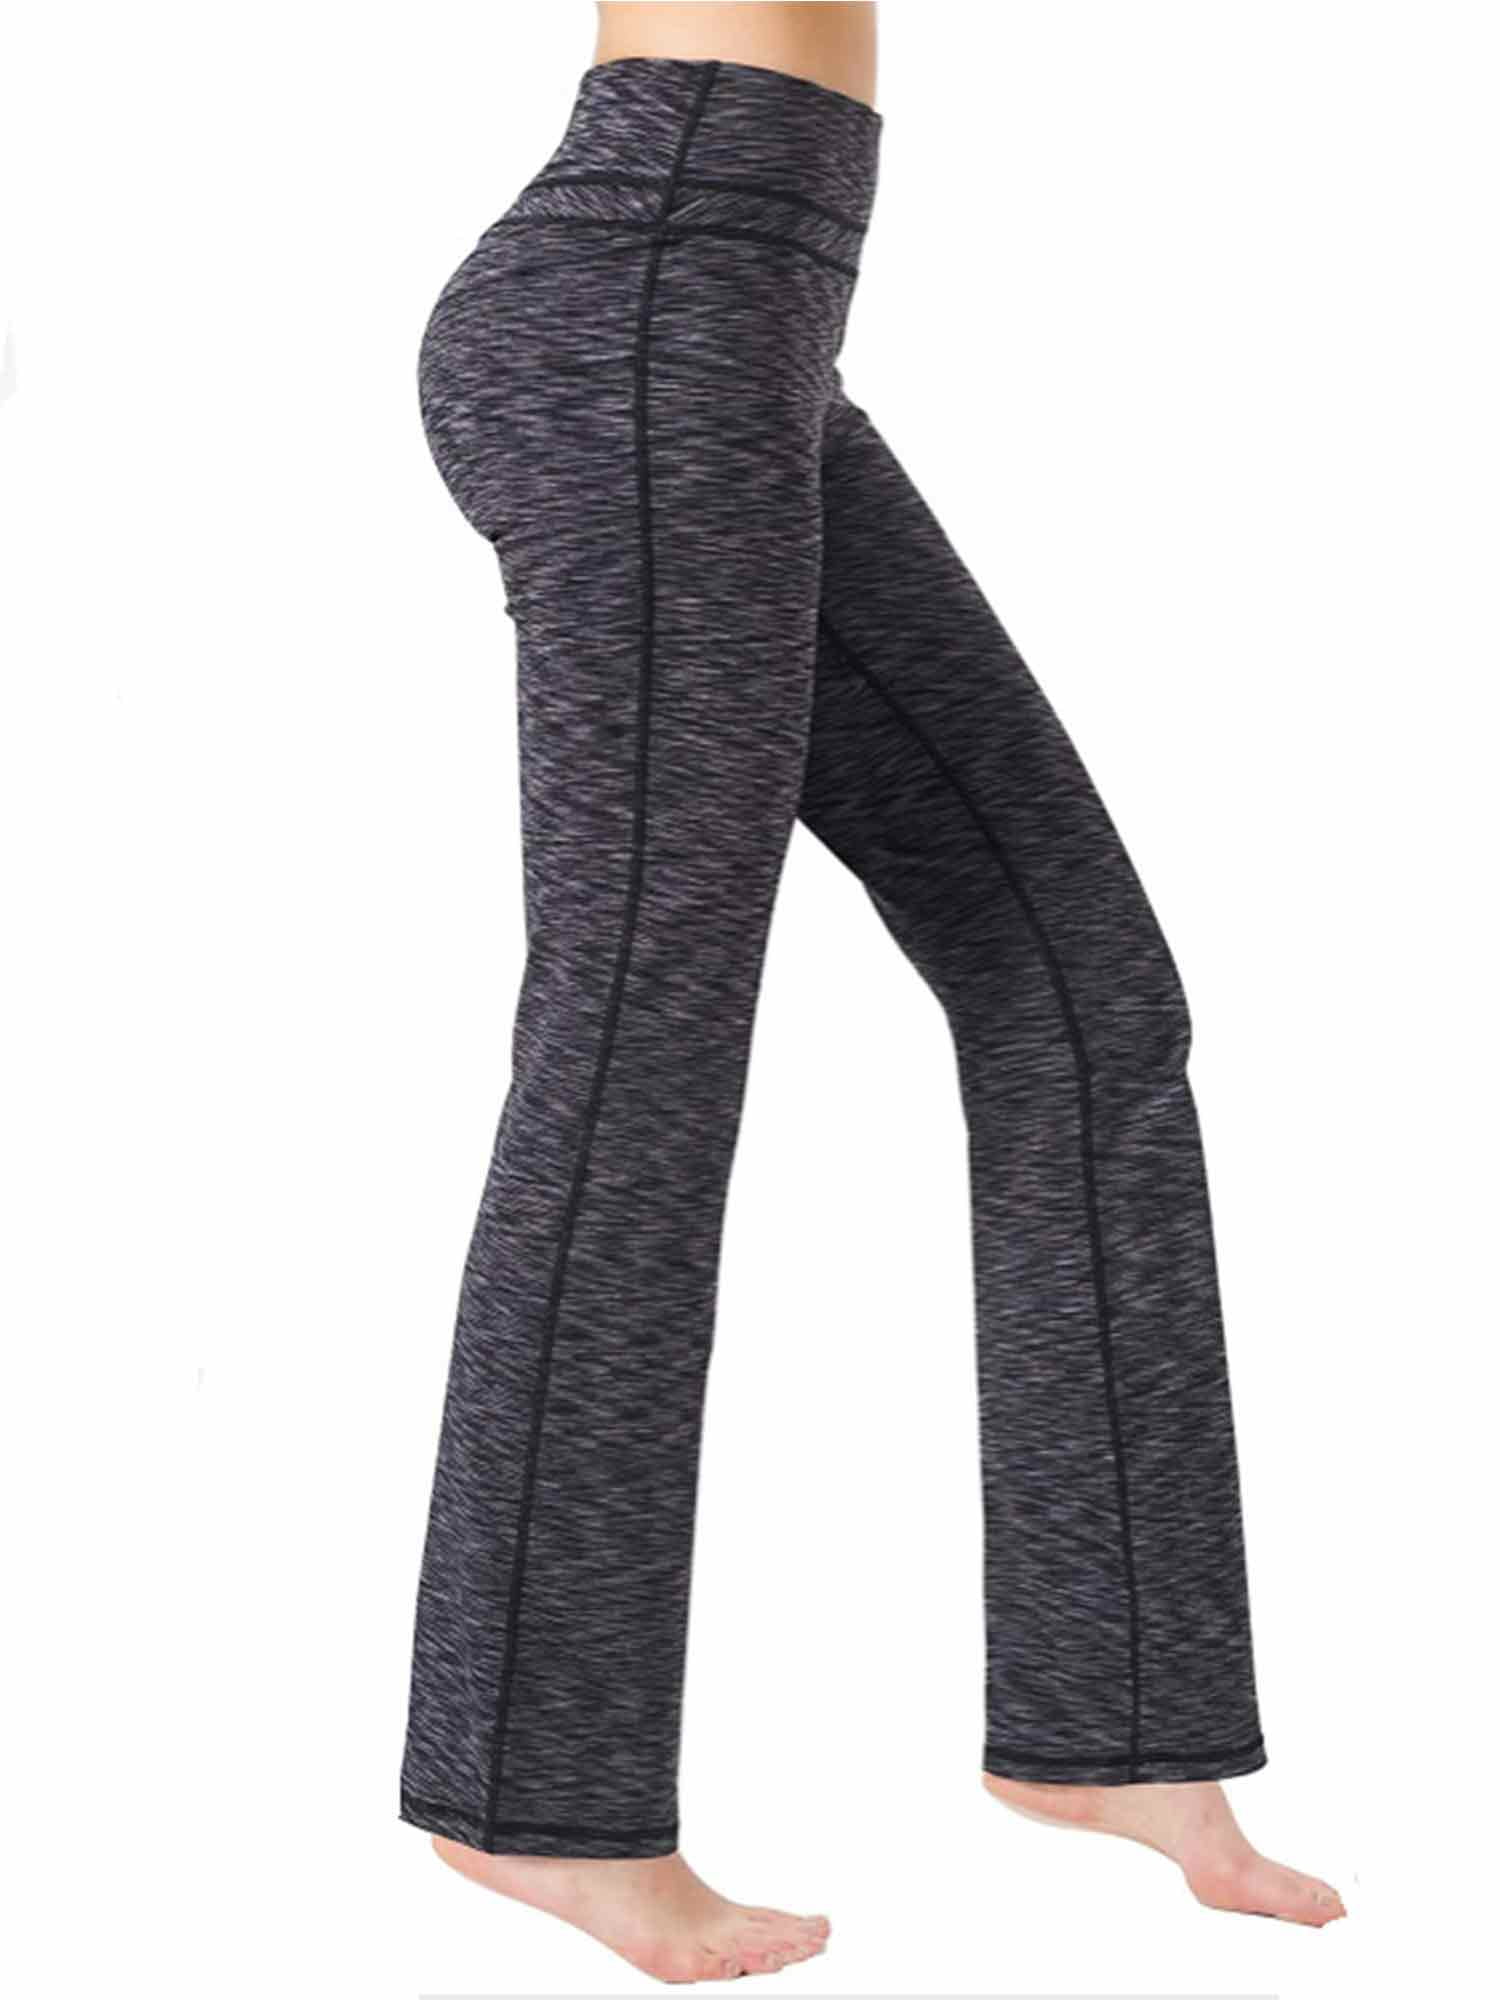 Bootcut Yoga Pants with Pockets for Women High Waist Workout Bootleg ...